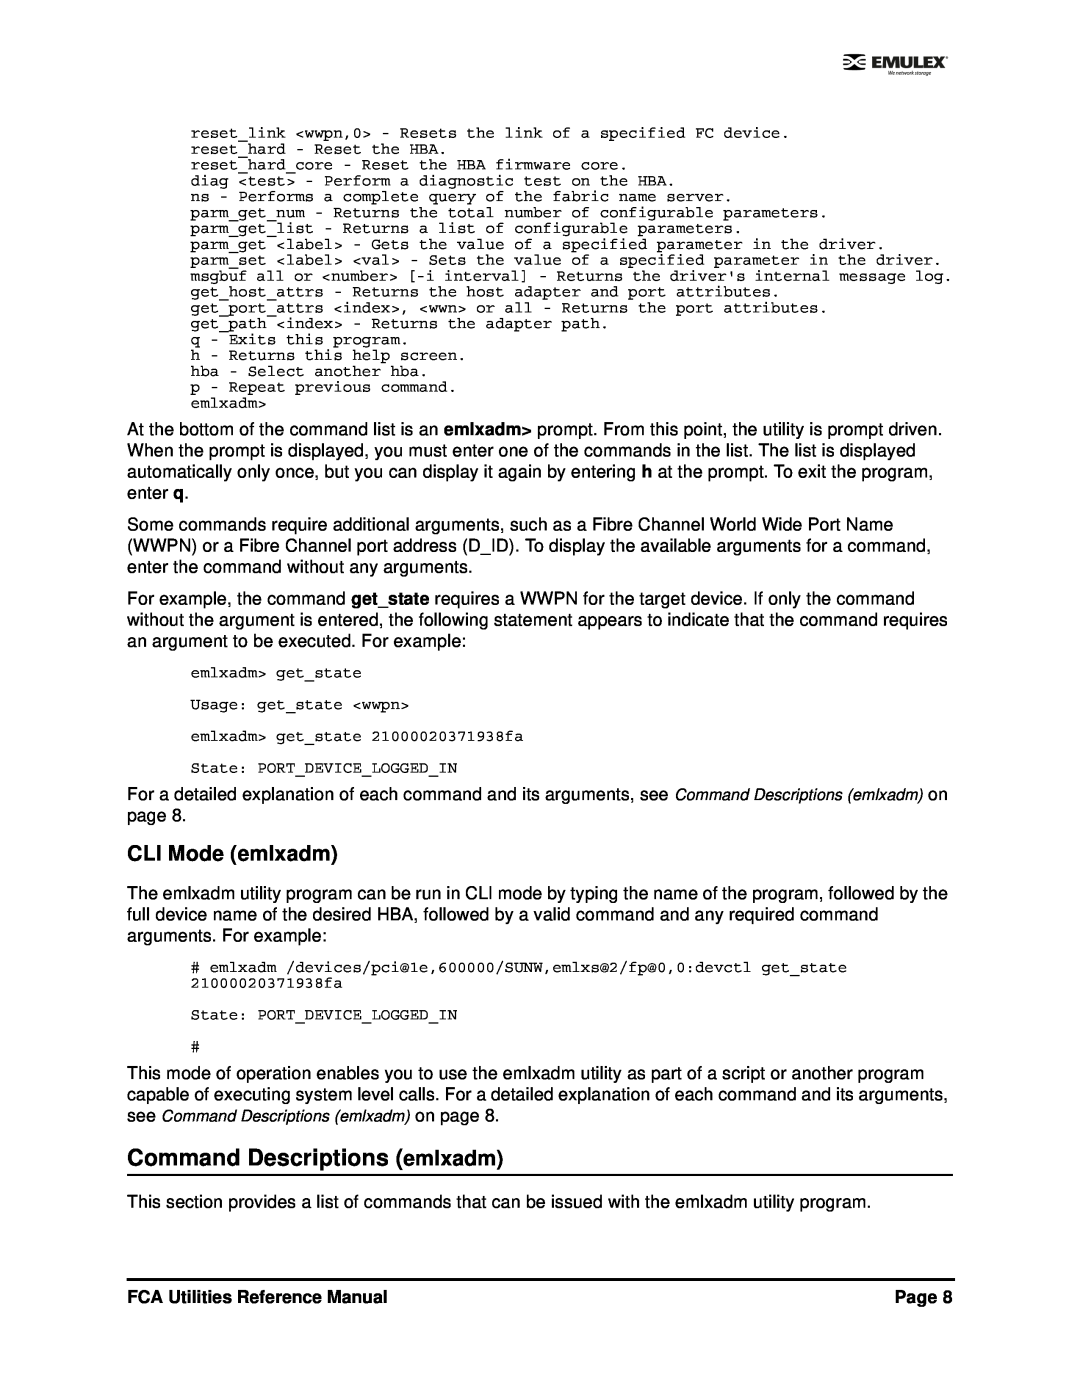 Emulex EMULEX manual Command Descriptions emlxadm, CLI Mode emlxadm, FCA Utilities Reference Manual, Page 